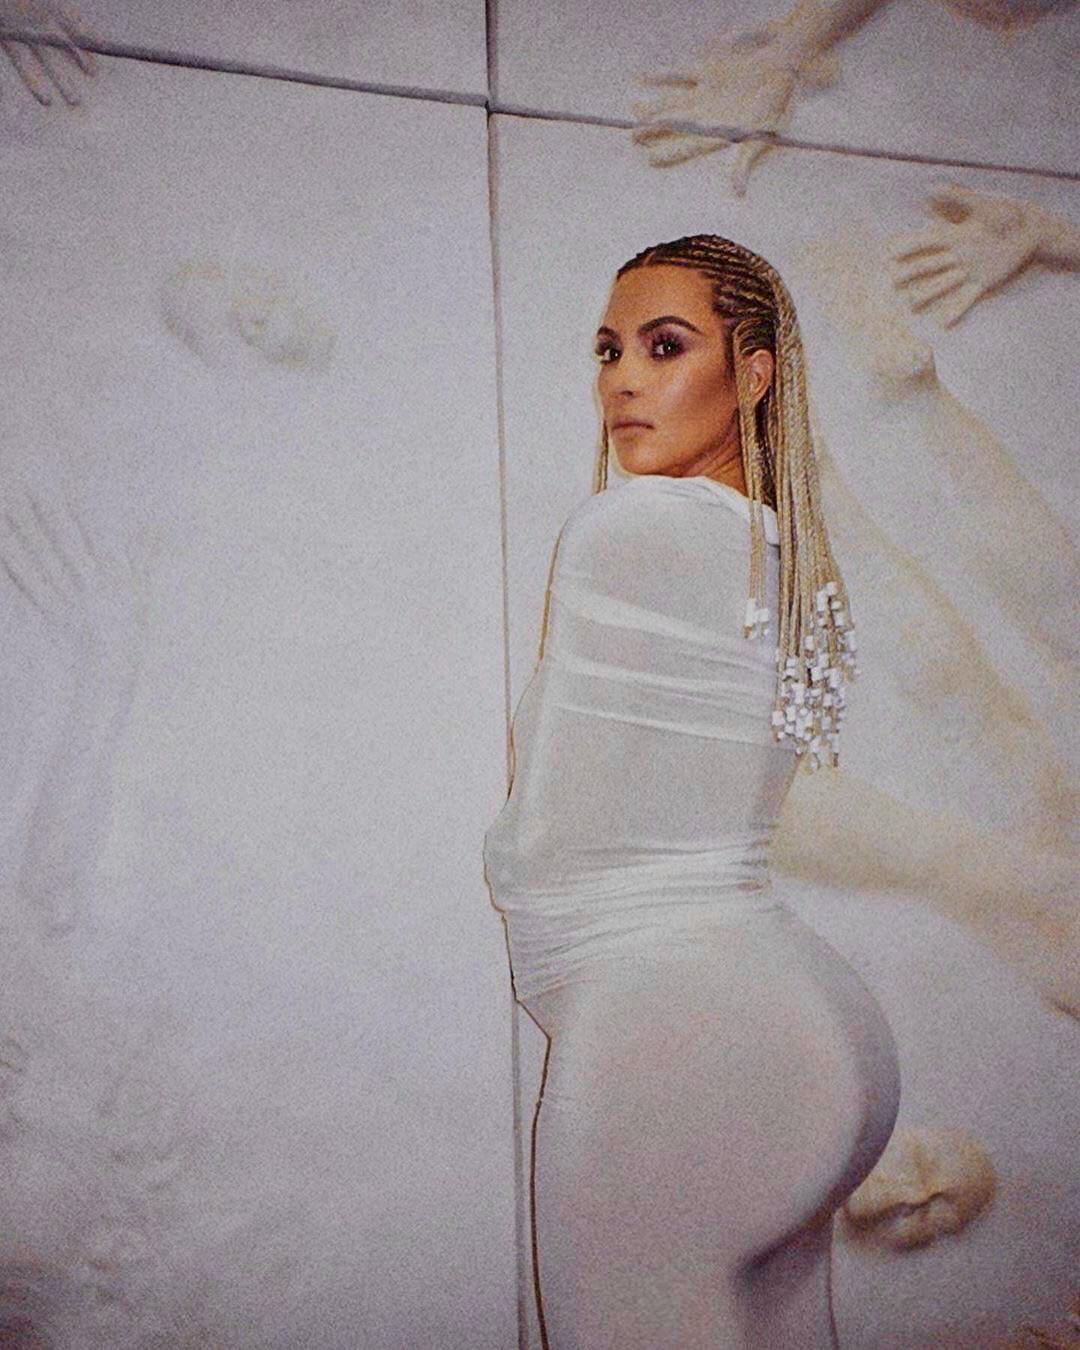 Kim Kardashian Topless Thong Magazine Photoshoot Leaked